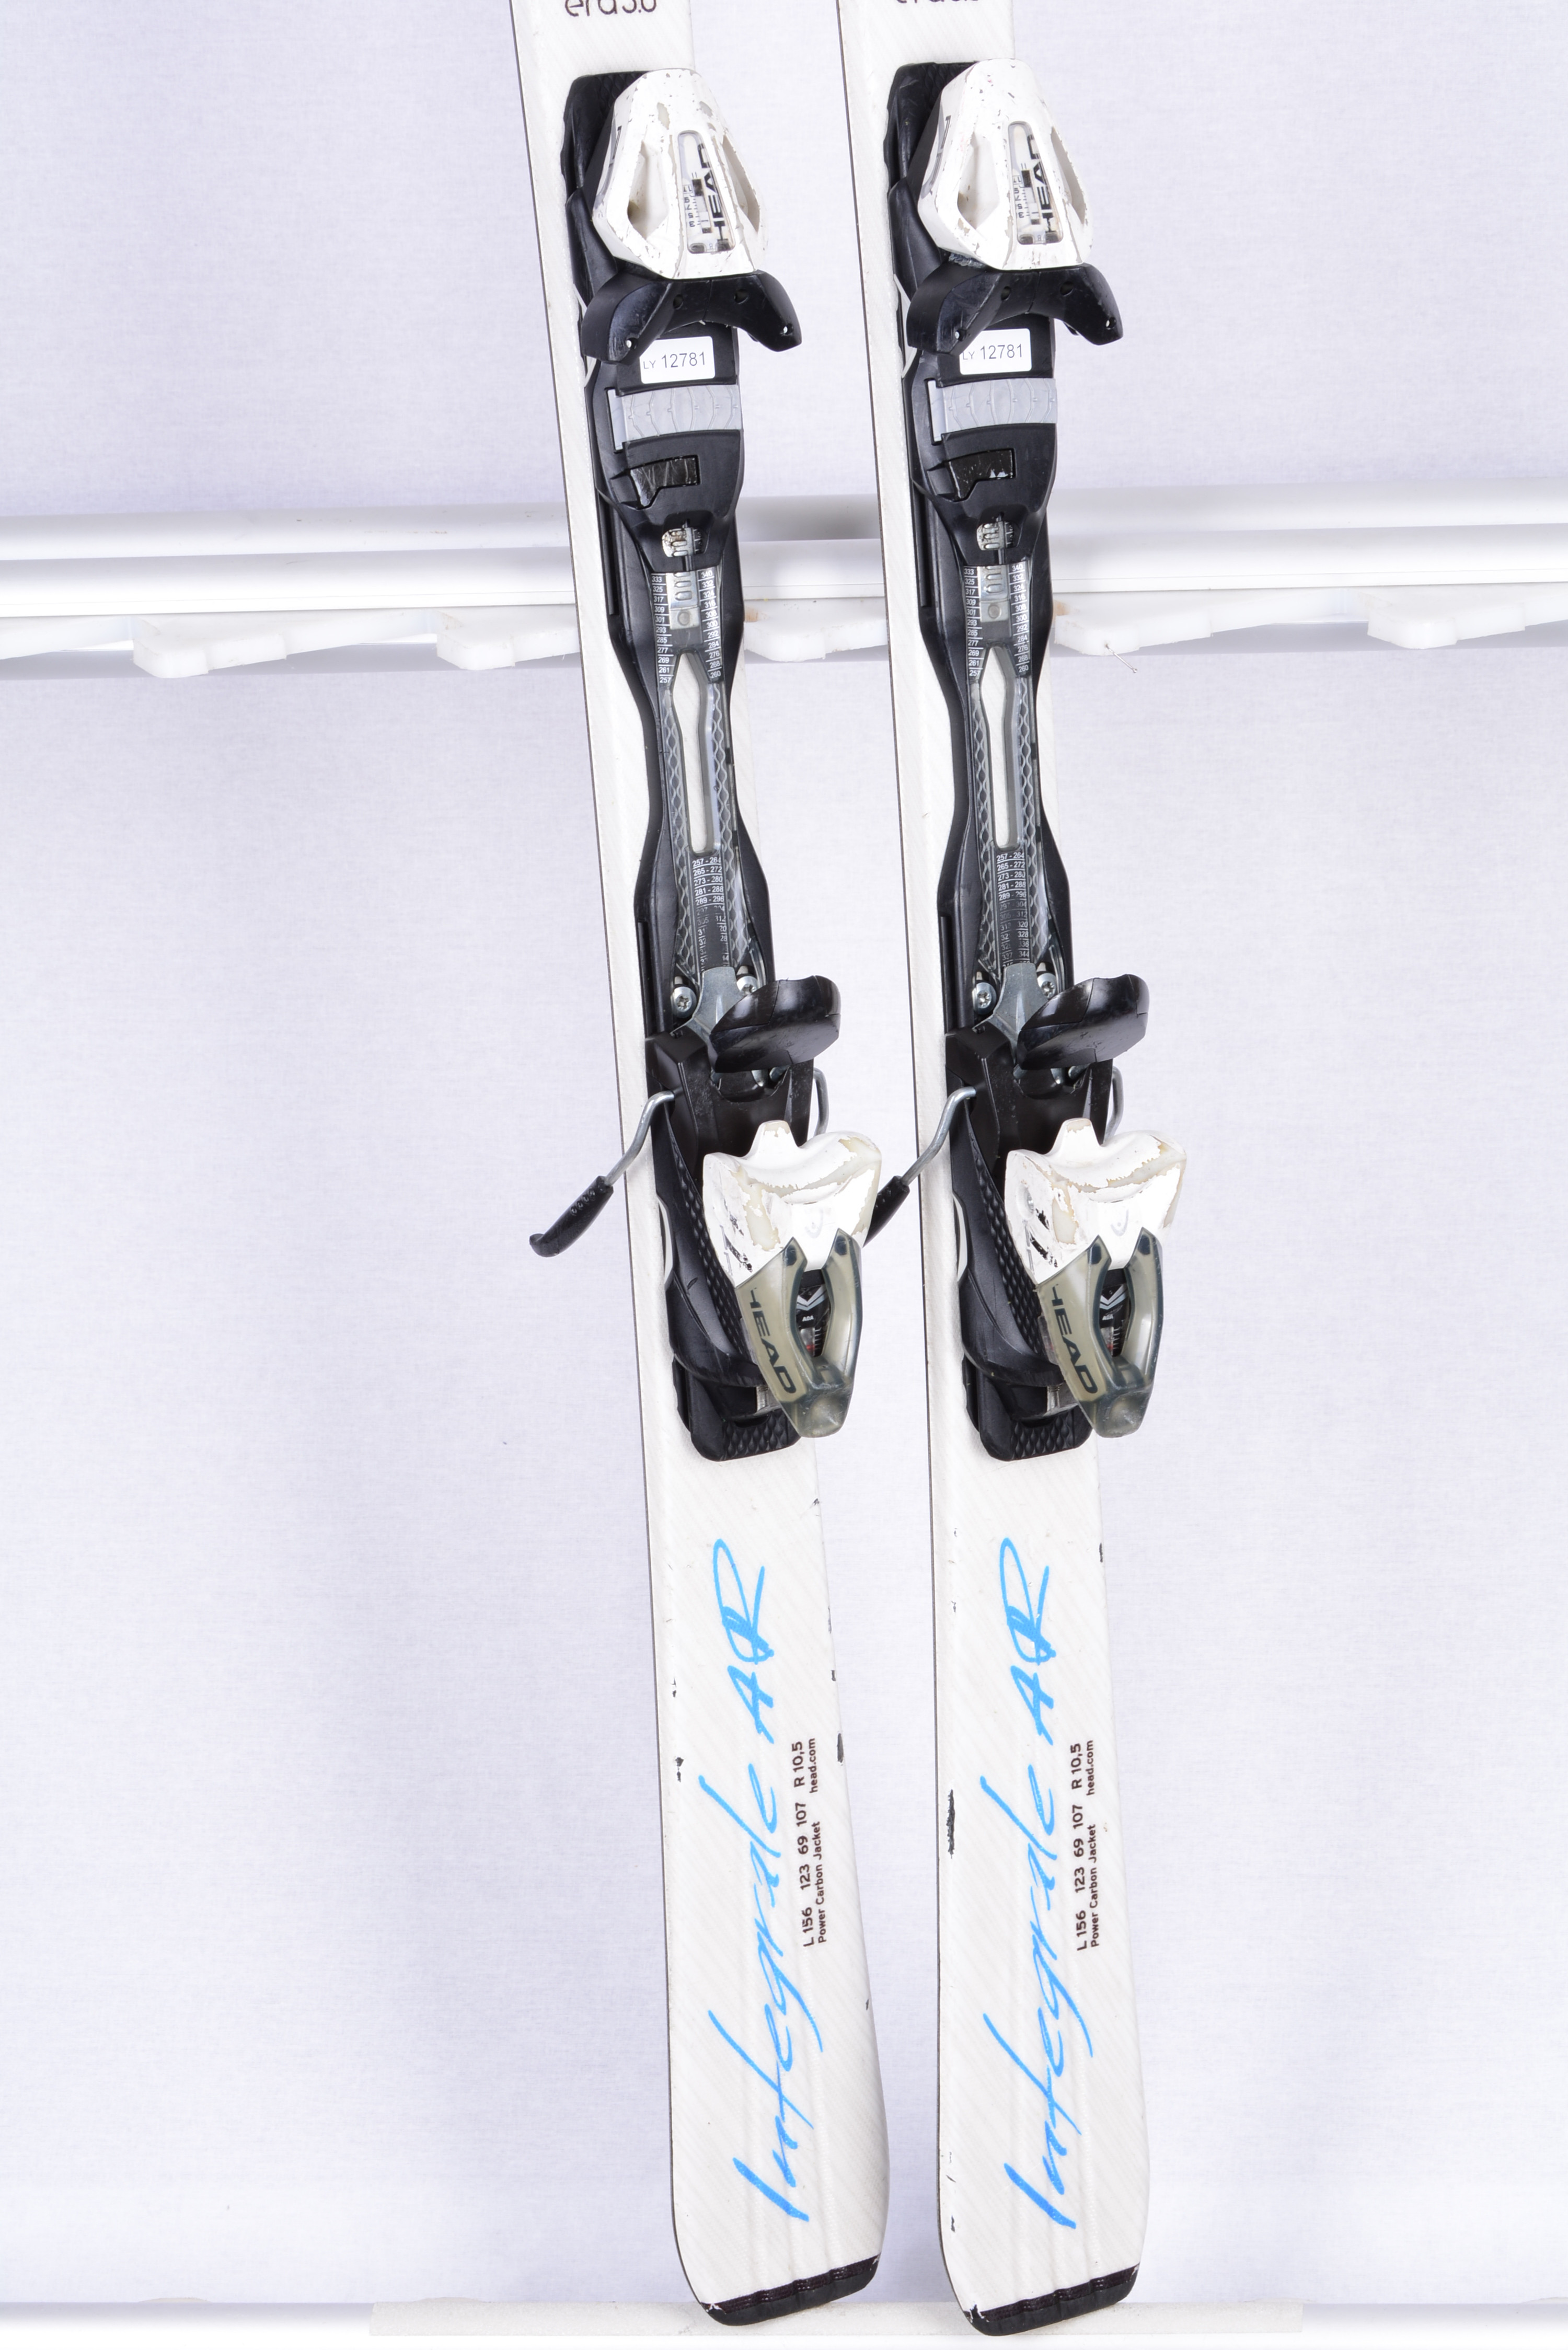 voorstel kas Vertrappen ski's HEAD INTEGRALE AR, Era 3.0, power carbon jacket + Head PR 11 -  Mardosport.nl